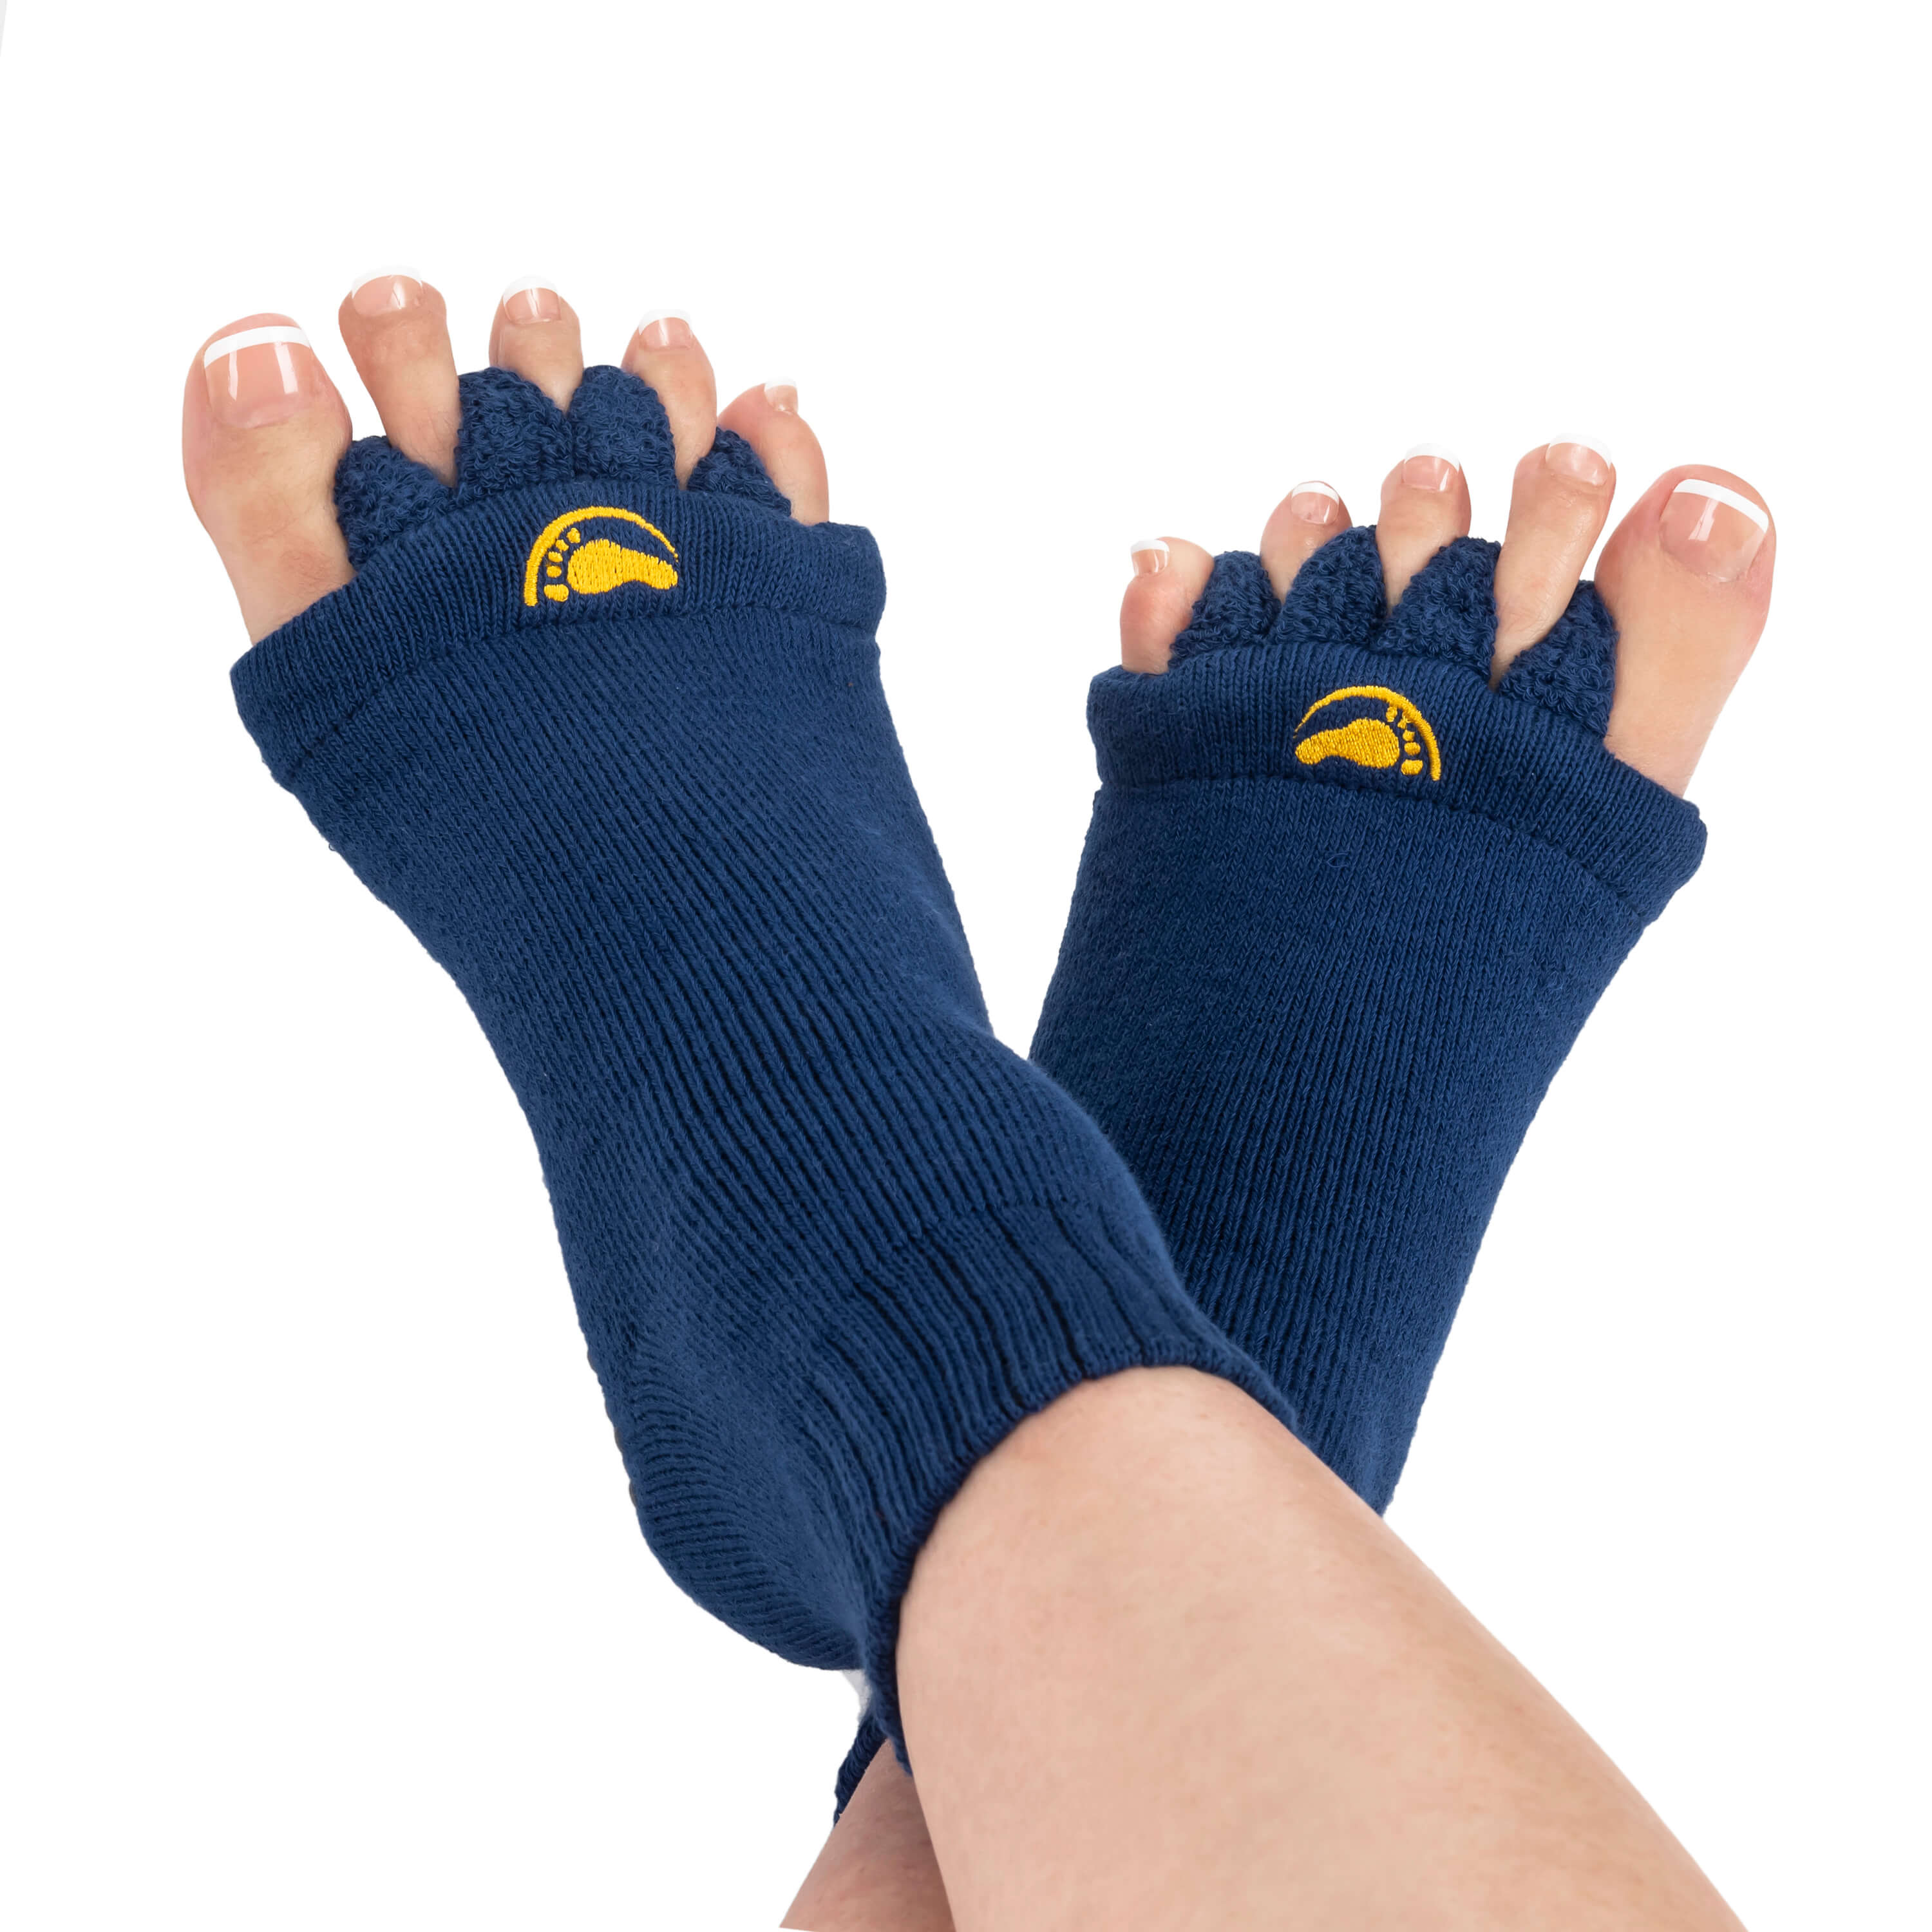 Happy Feet: The Best Moisture Wicking Socks » Explorersweb